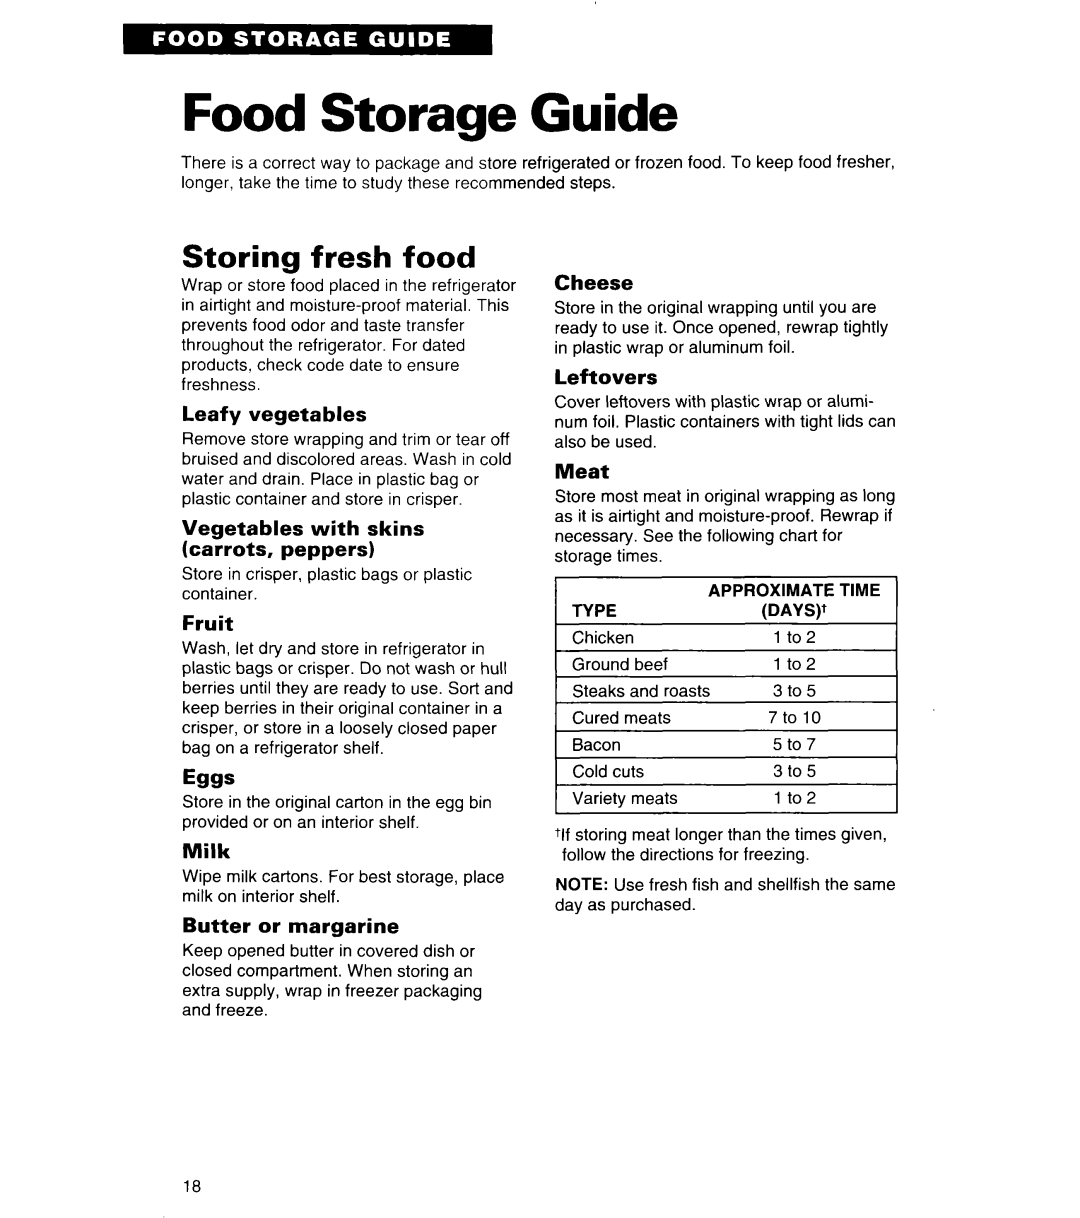 Whirlpool 4ET20ZK Food Storage Guide, Storing fresh food, Leafy vegetables, Vegetables with skins carrots, peppers, Fruit 